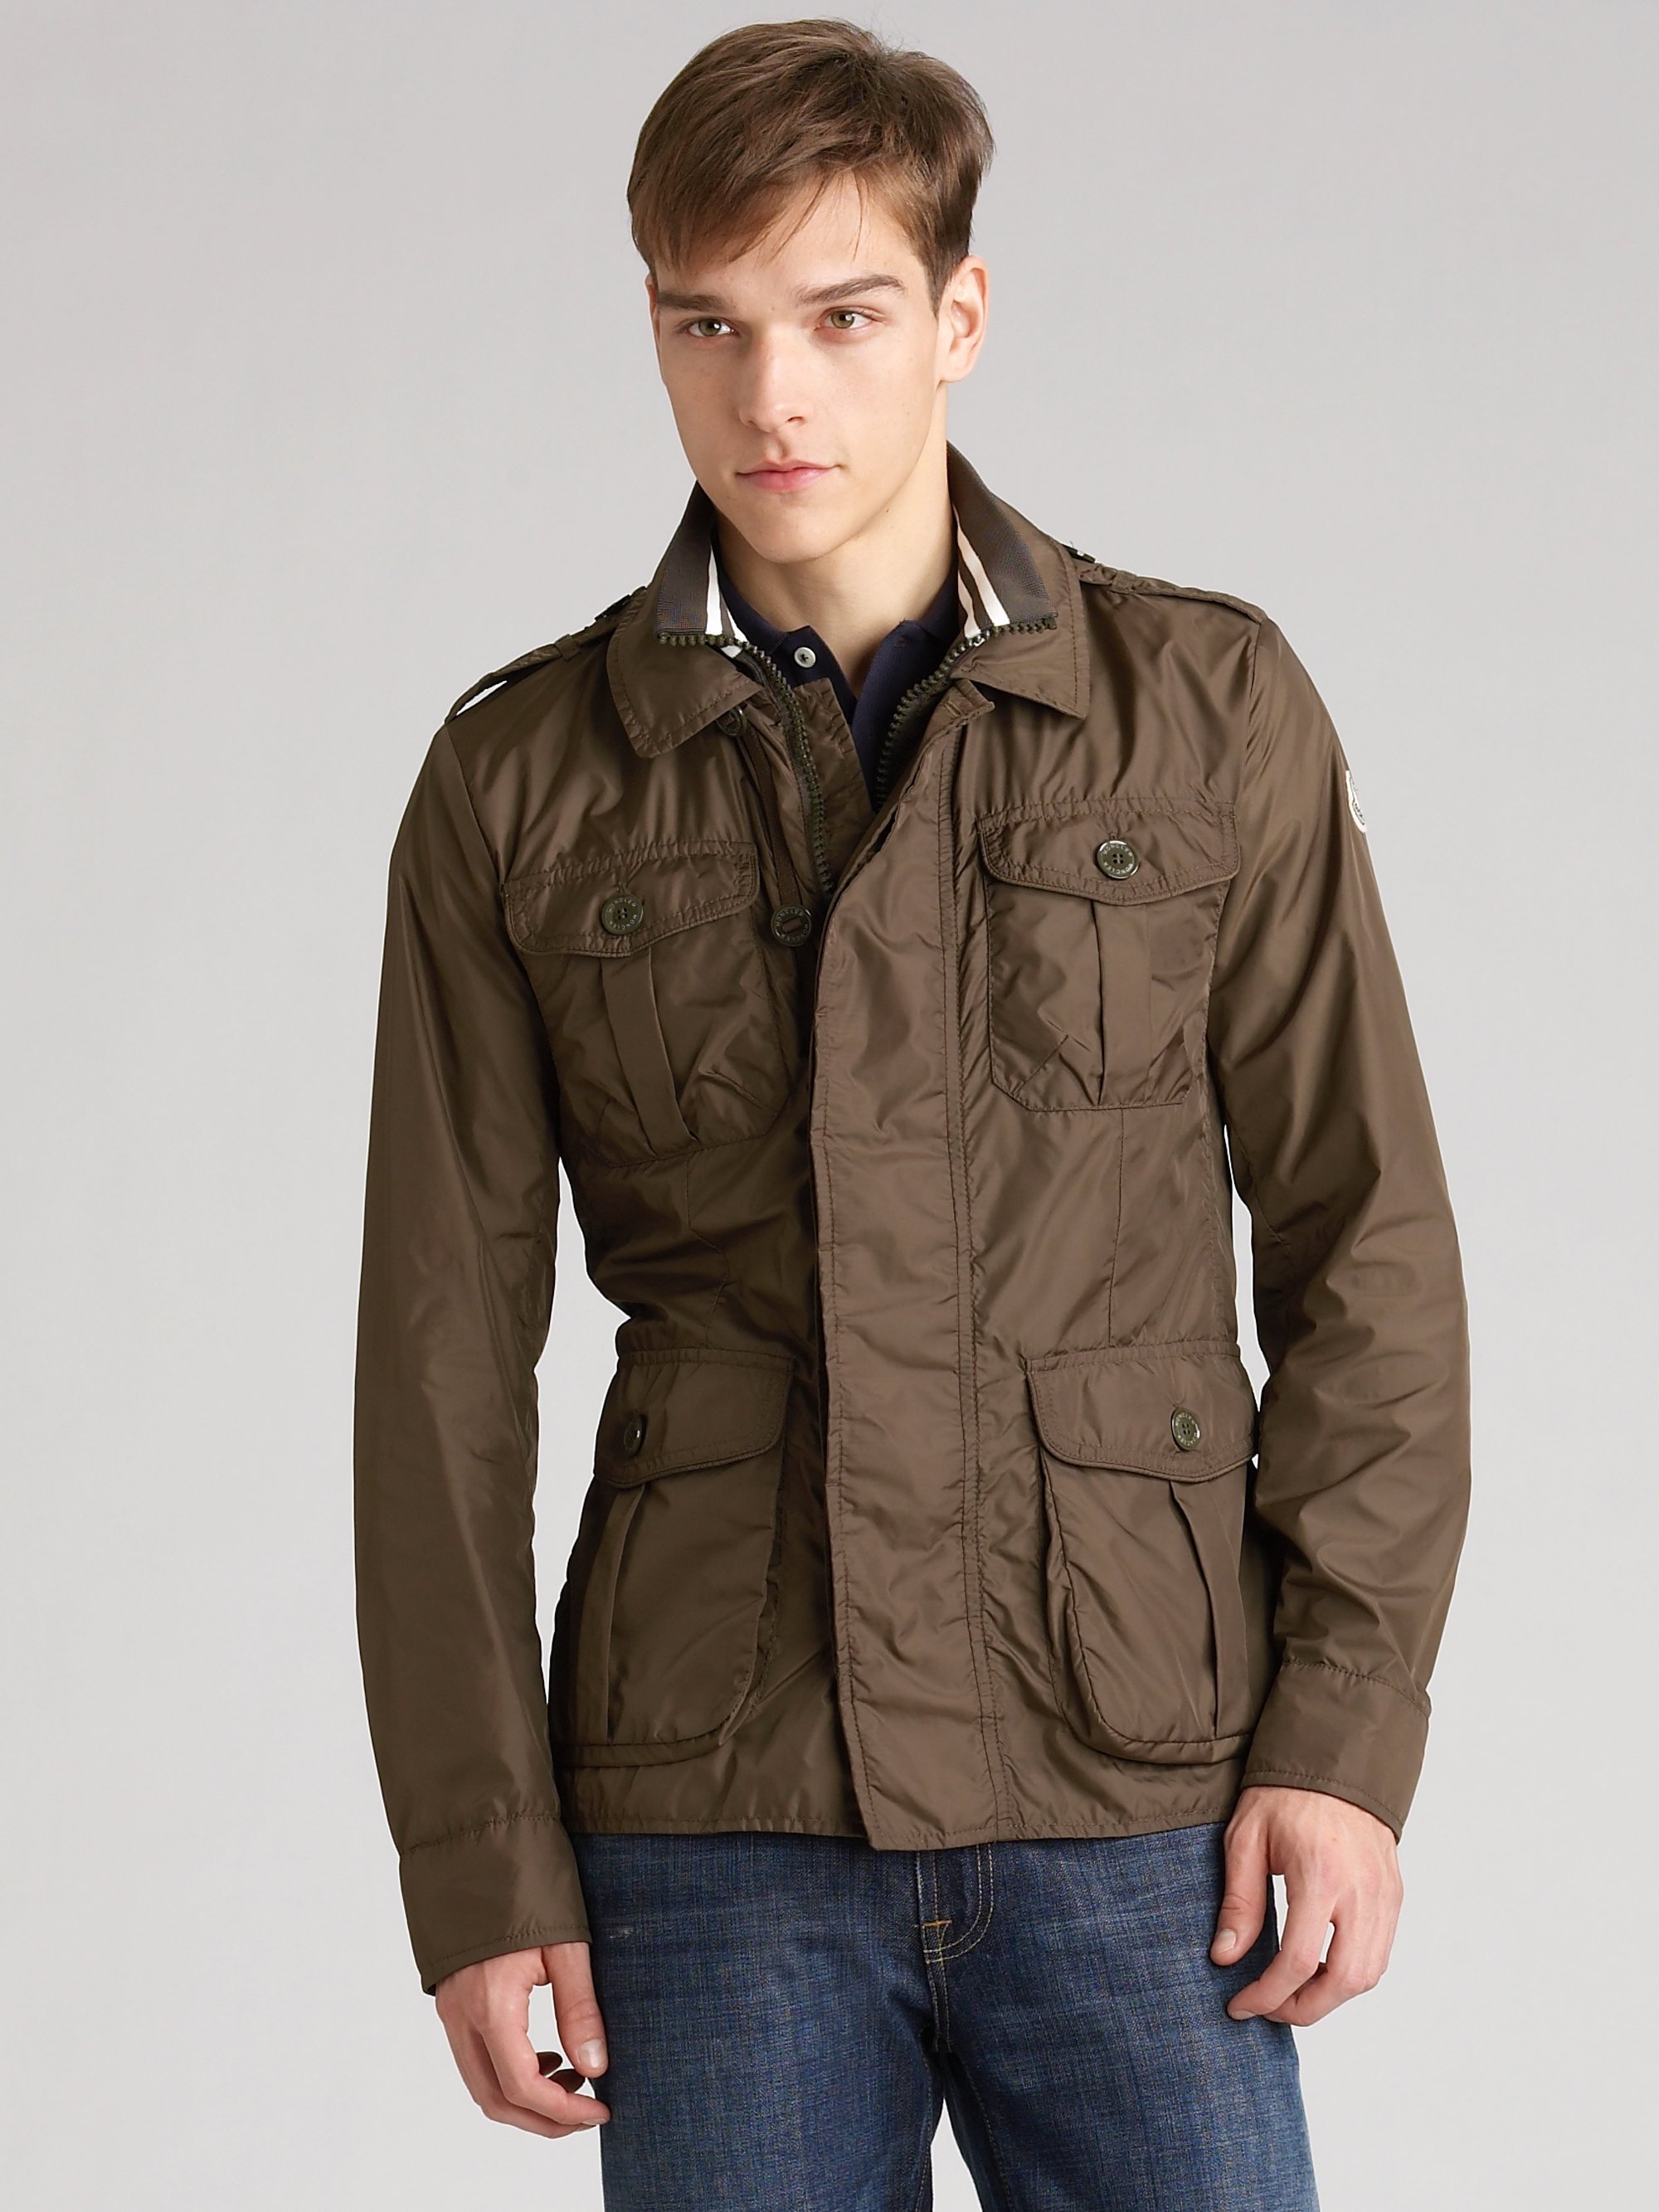 Lyst - Moncler Field Jacket in Brown for Men